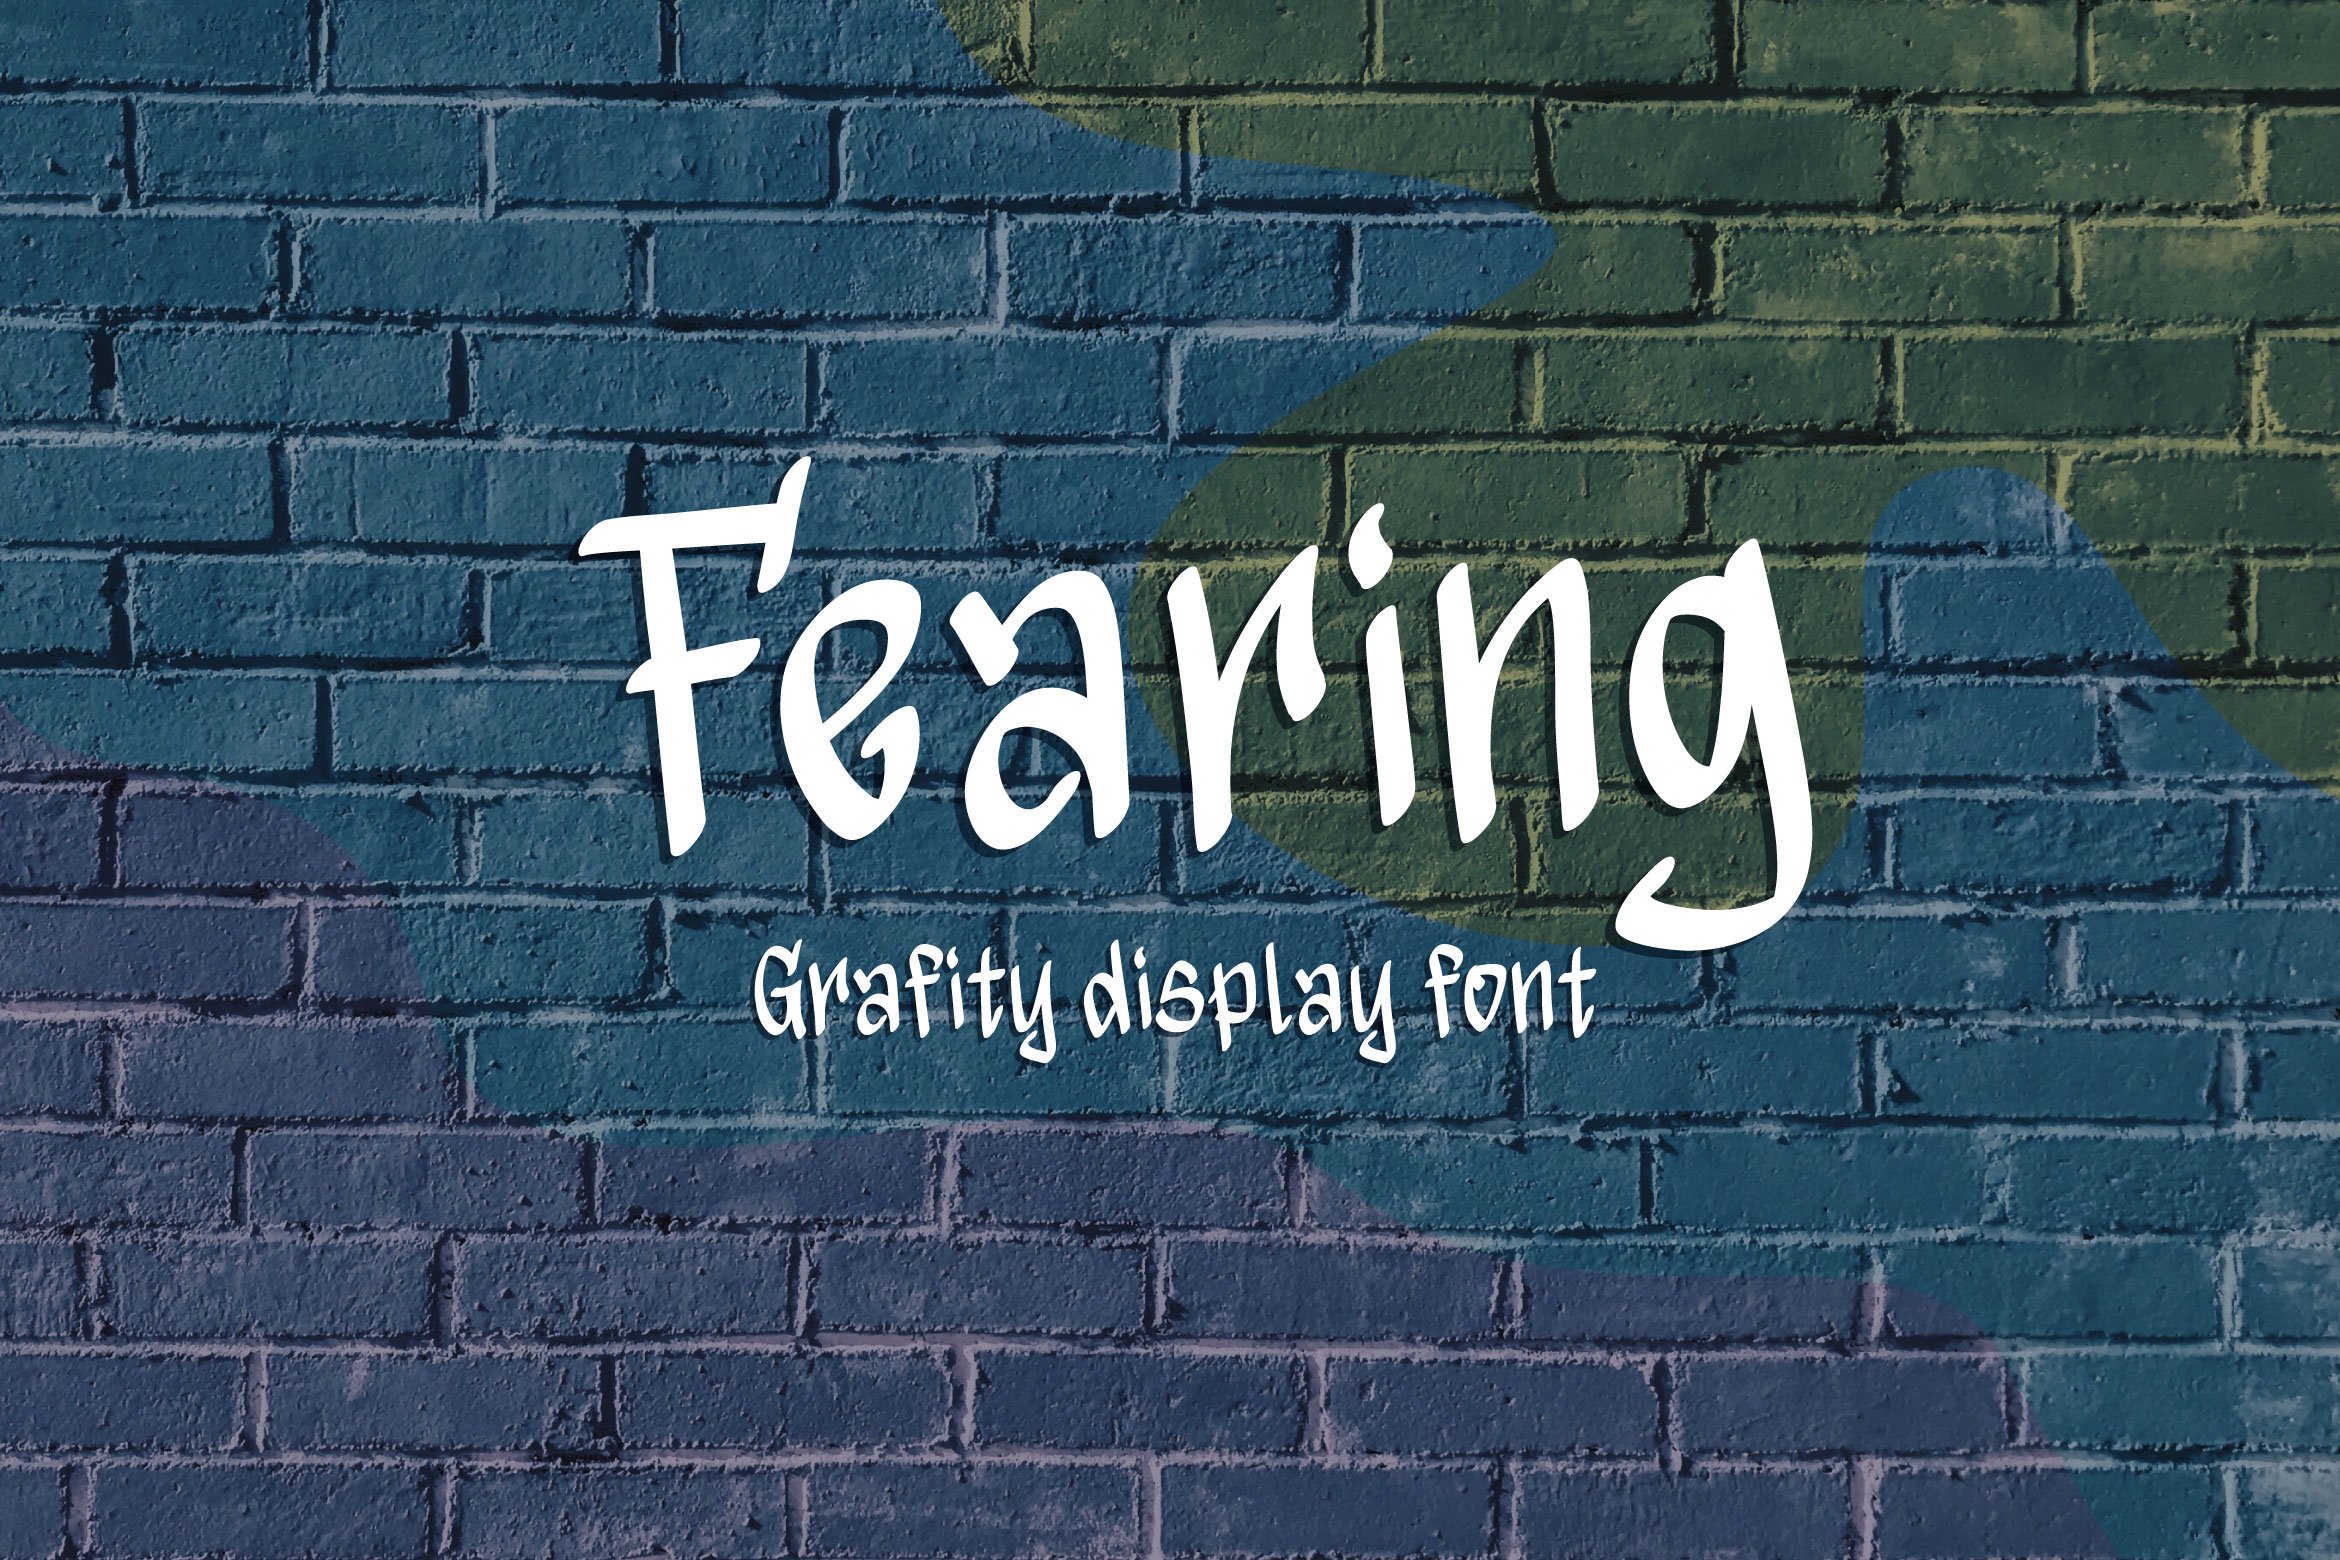 Fearing - Graffiti Display Font cover image.